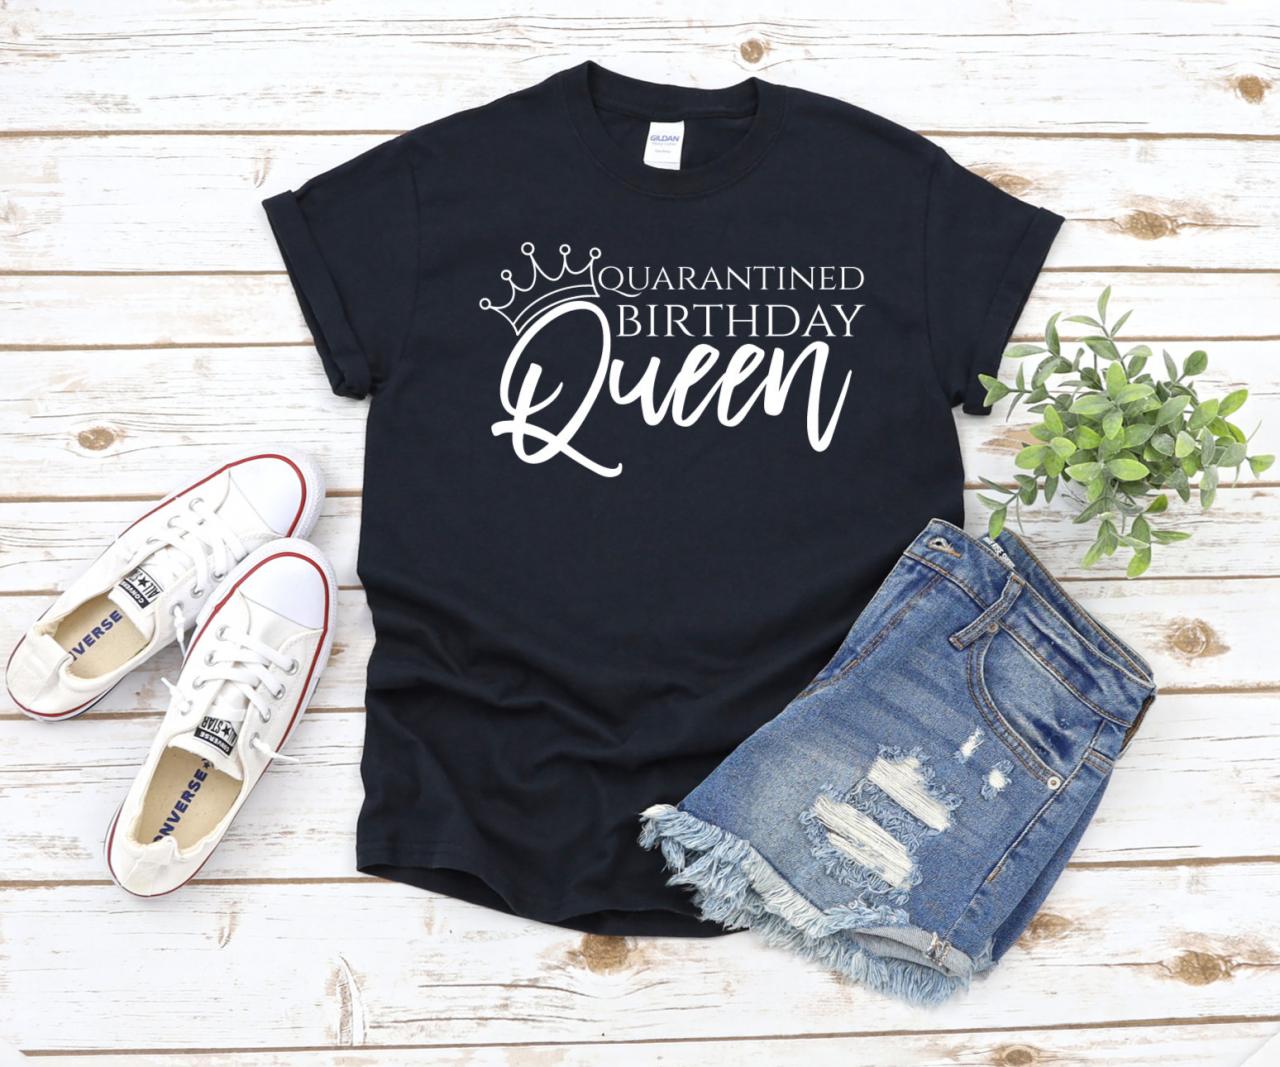 Quarantined Birthday Queen Shirt, Bday Tshirt, Birthday 2020, Birthday in Quarantine, Women Birthday Shirt, Social Distancing, Corona